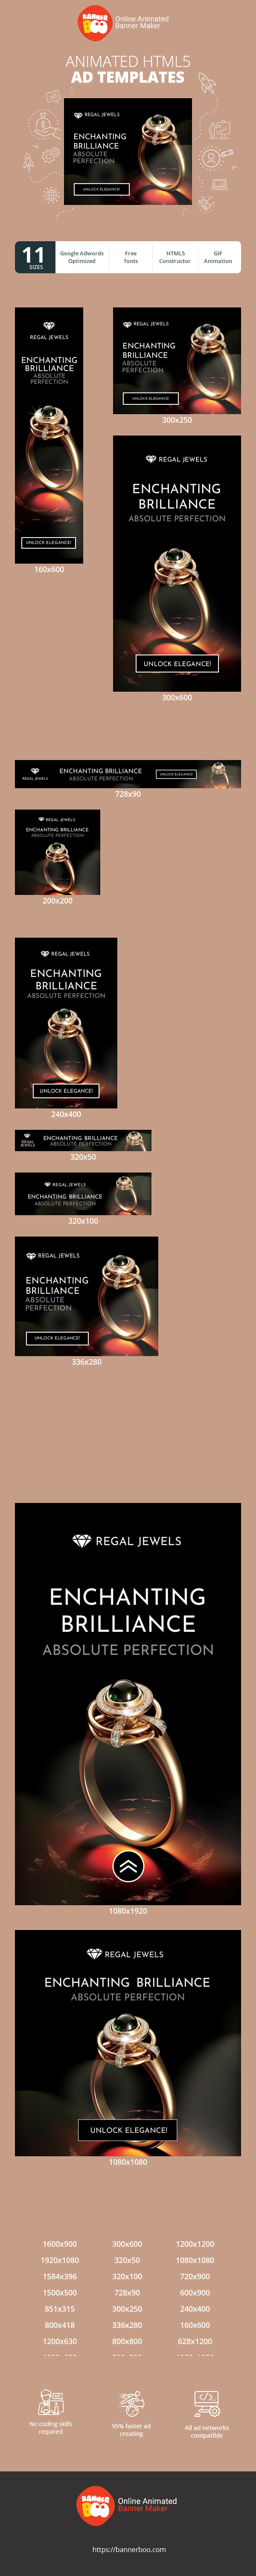 Шаблон рекламного банера — Enchanting Brilliance Absolute Perfection — Jewelry